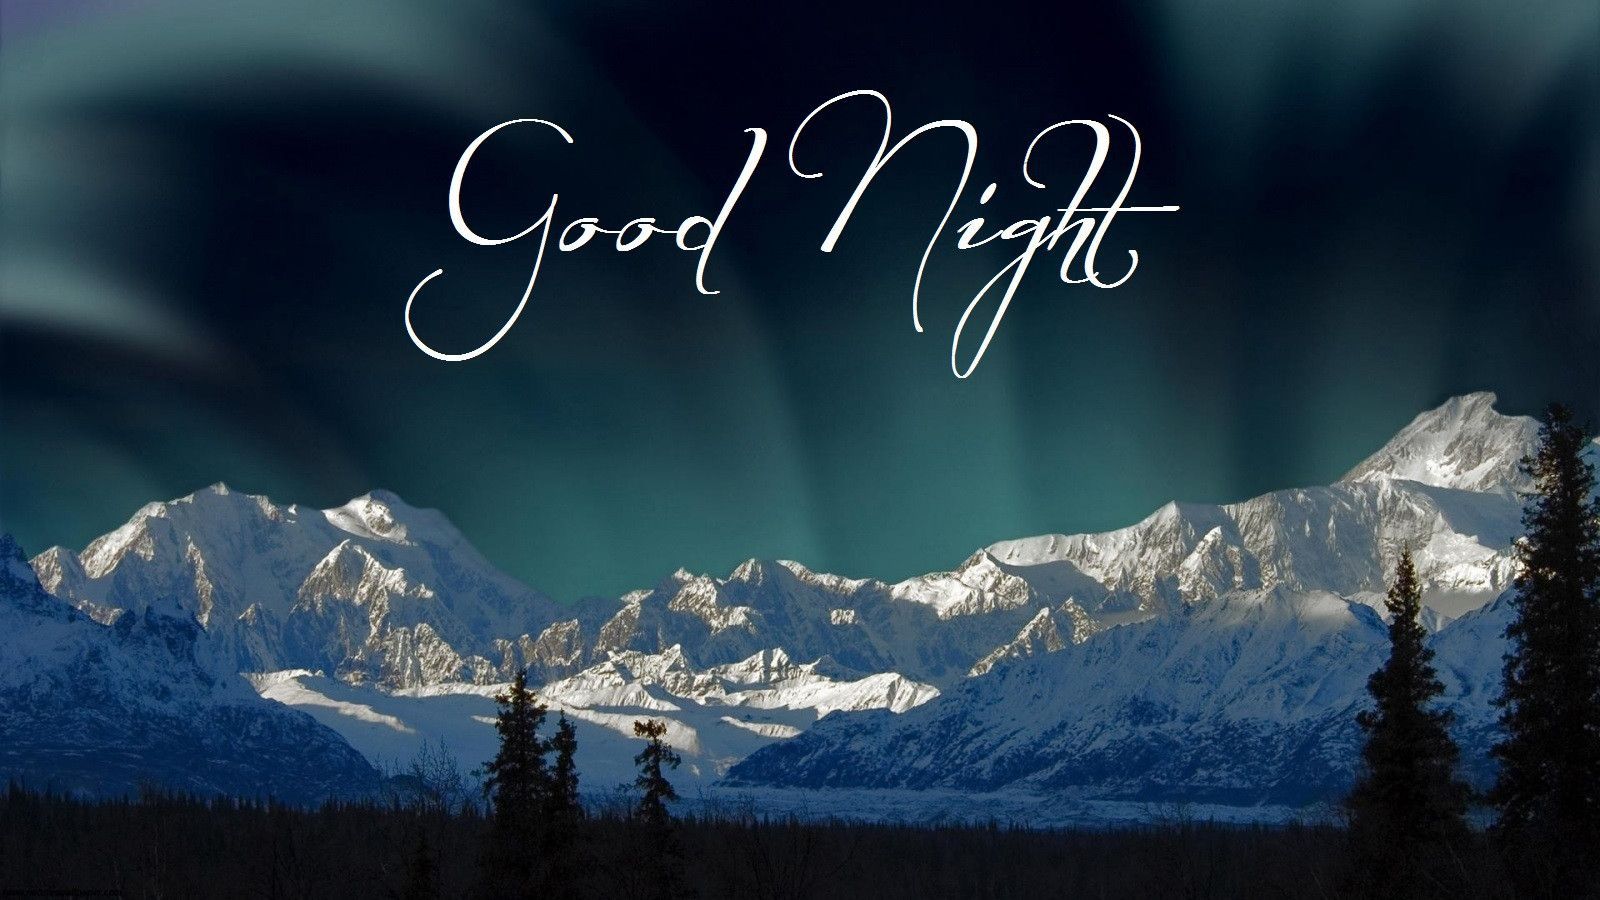 Mountains Good Night Wallpaper. Good Night Wallpaper, Good Night Image Hd, Lovely Good Night